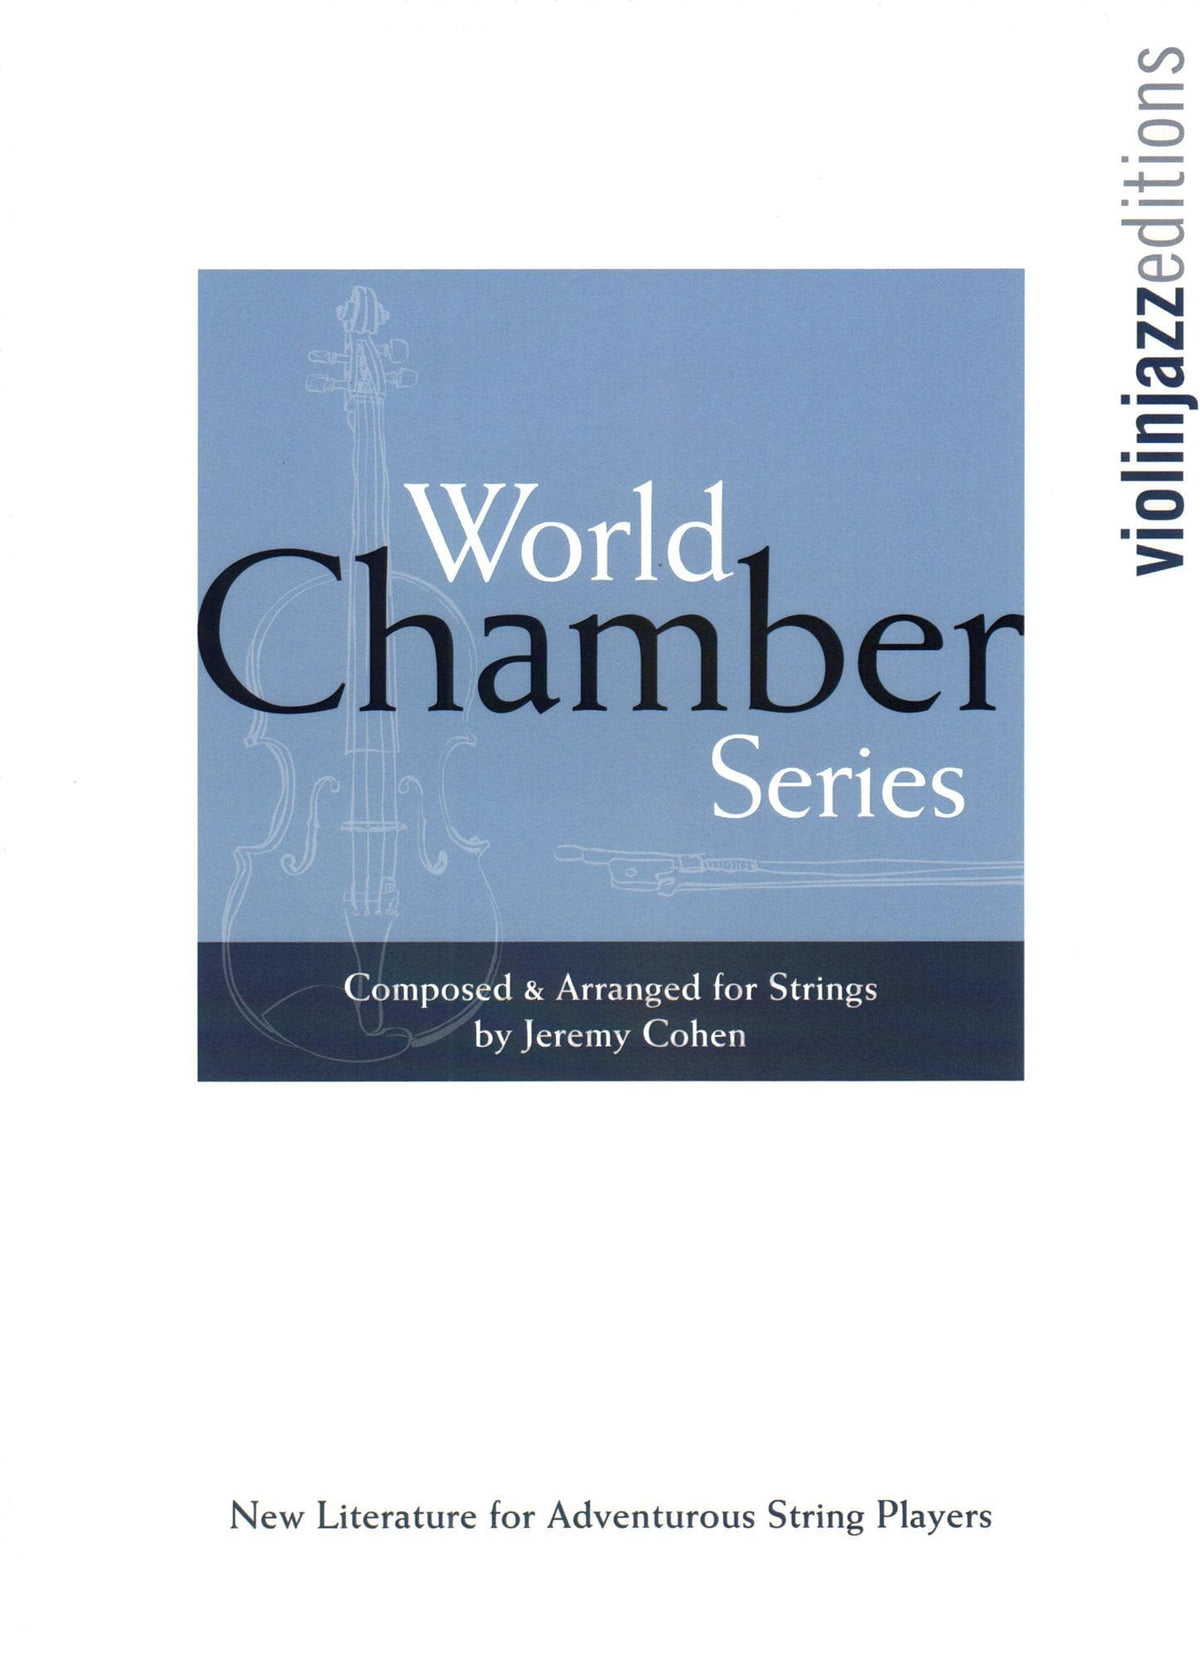 Cohen, Jeremy - Jesusita Polka - World Chamber Series - for String Quartet - Violinjazz Editions